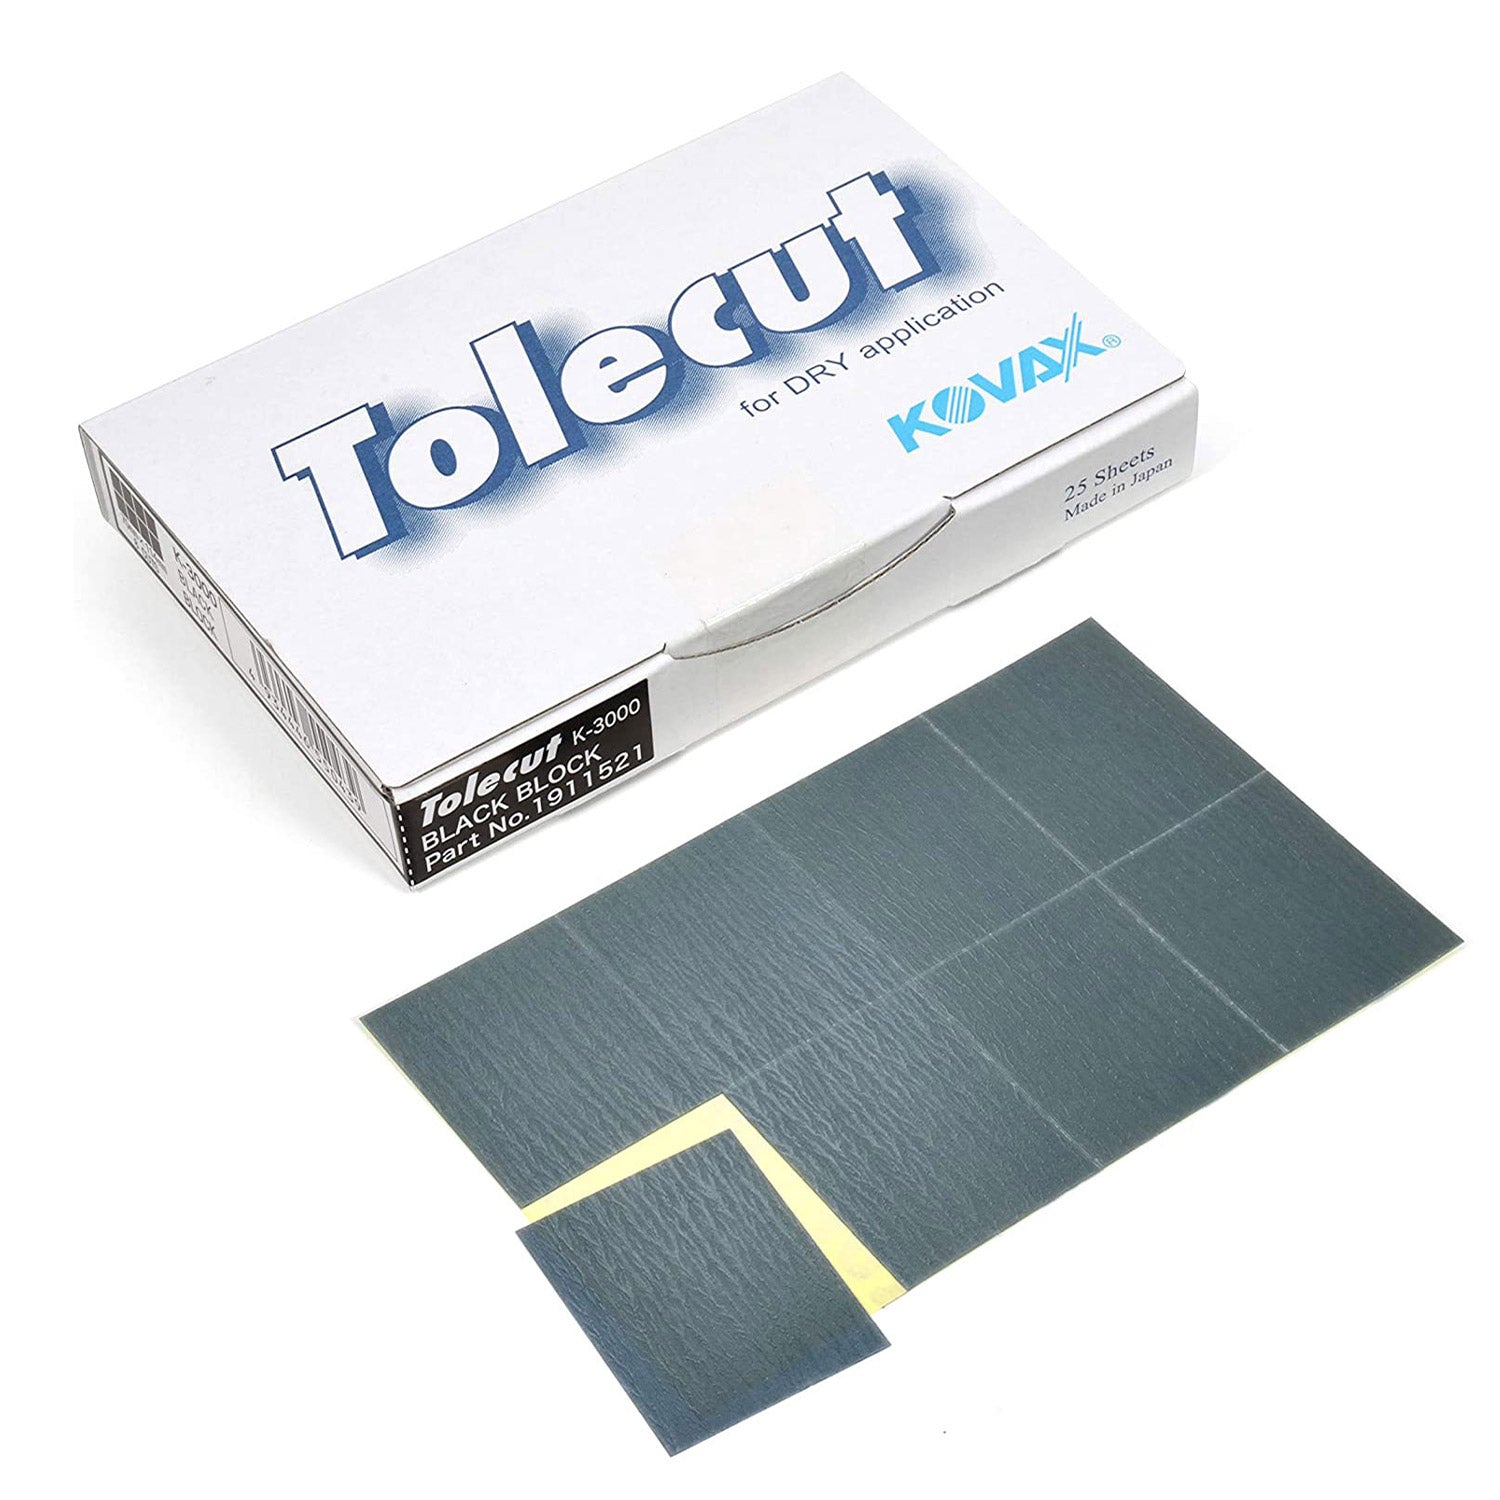 tolecut-sheets-for-dry-sanding-3000-grit